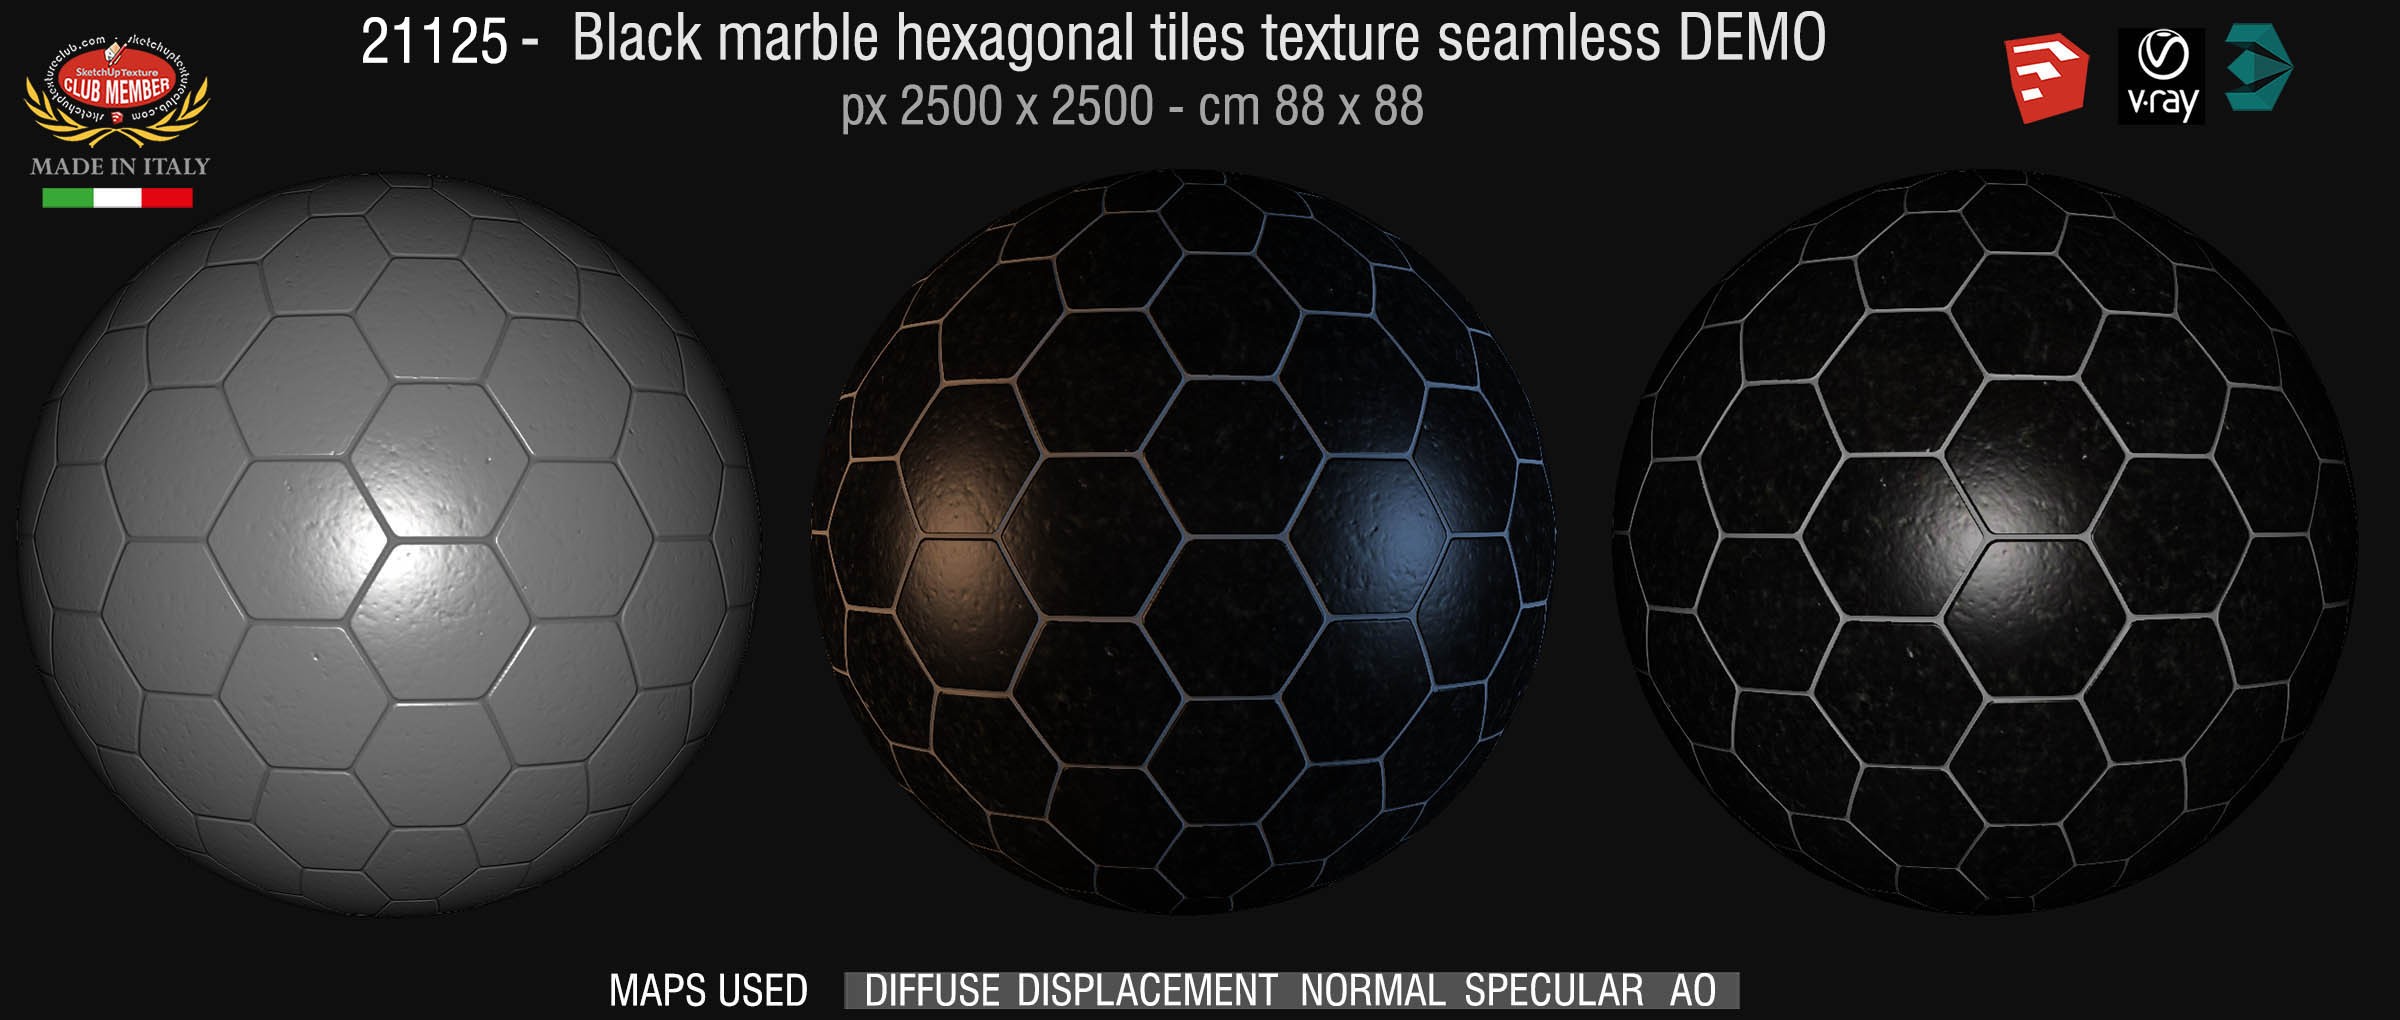 Hexagonal black marble floor tile texture seamless 1 21125